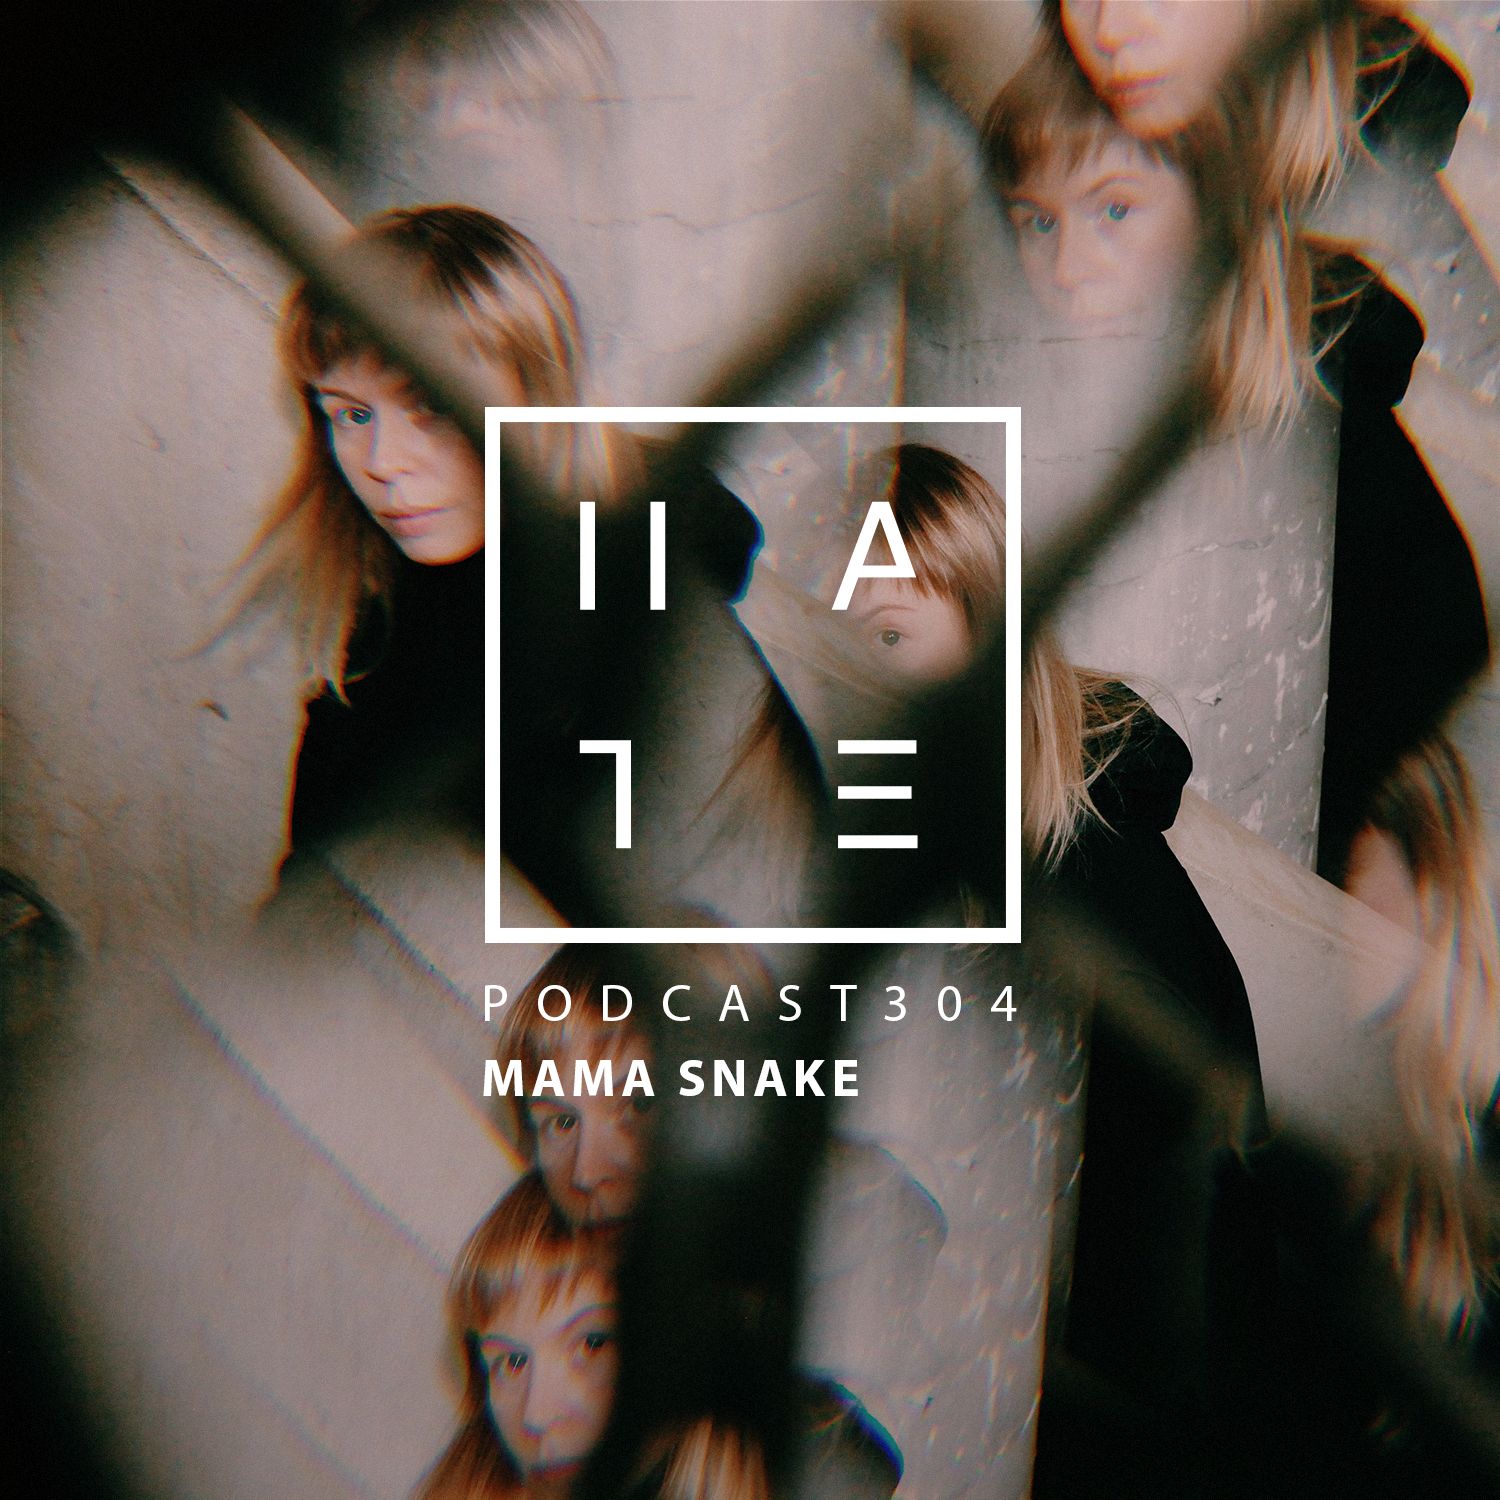 Parsisiųsti Mama Snake - HATE Podcast 304